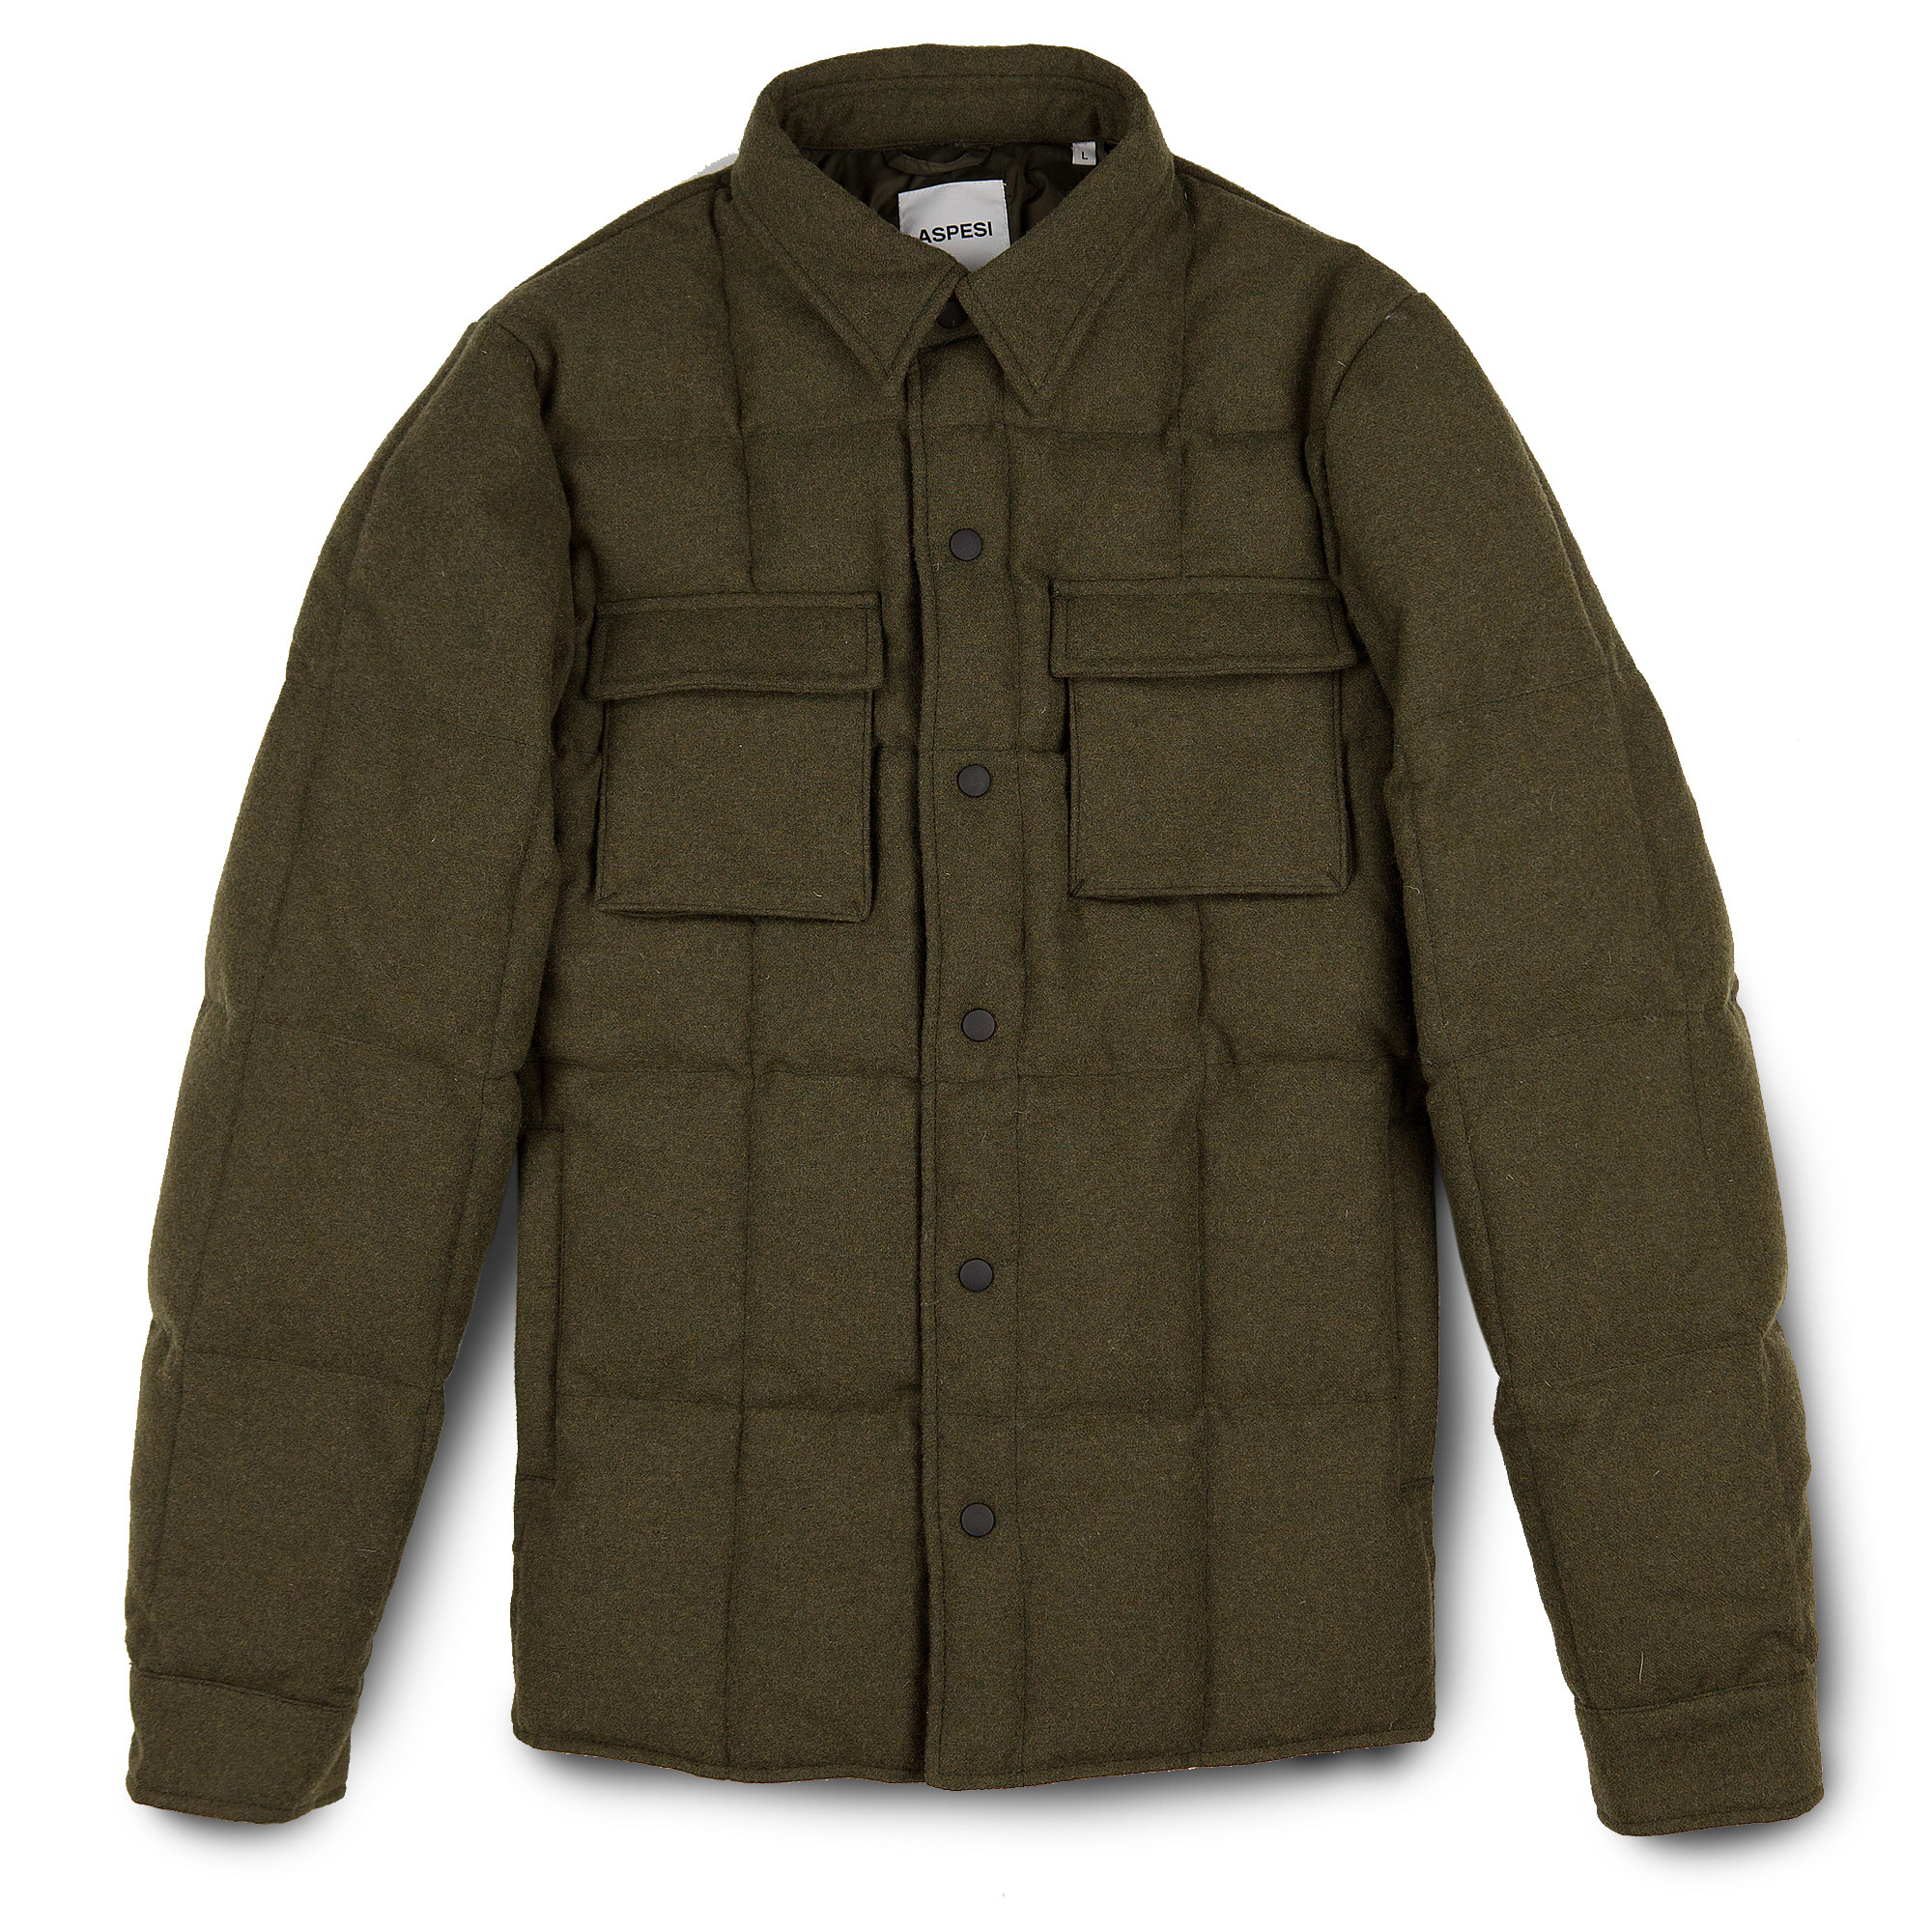 aspesi-grey-wool-checker-jacket-product-1-4900931-621337081.jpeg